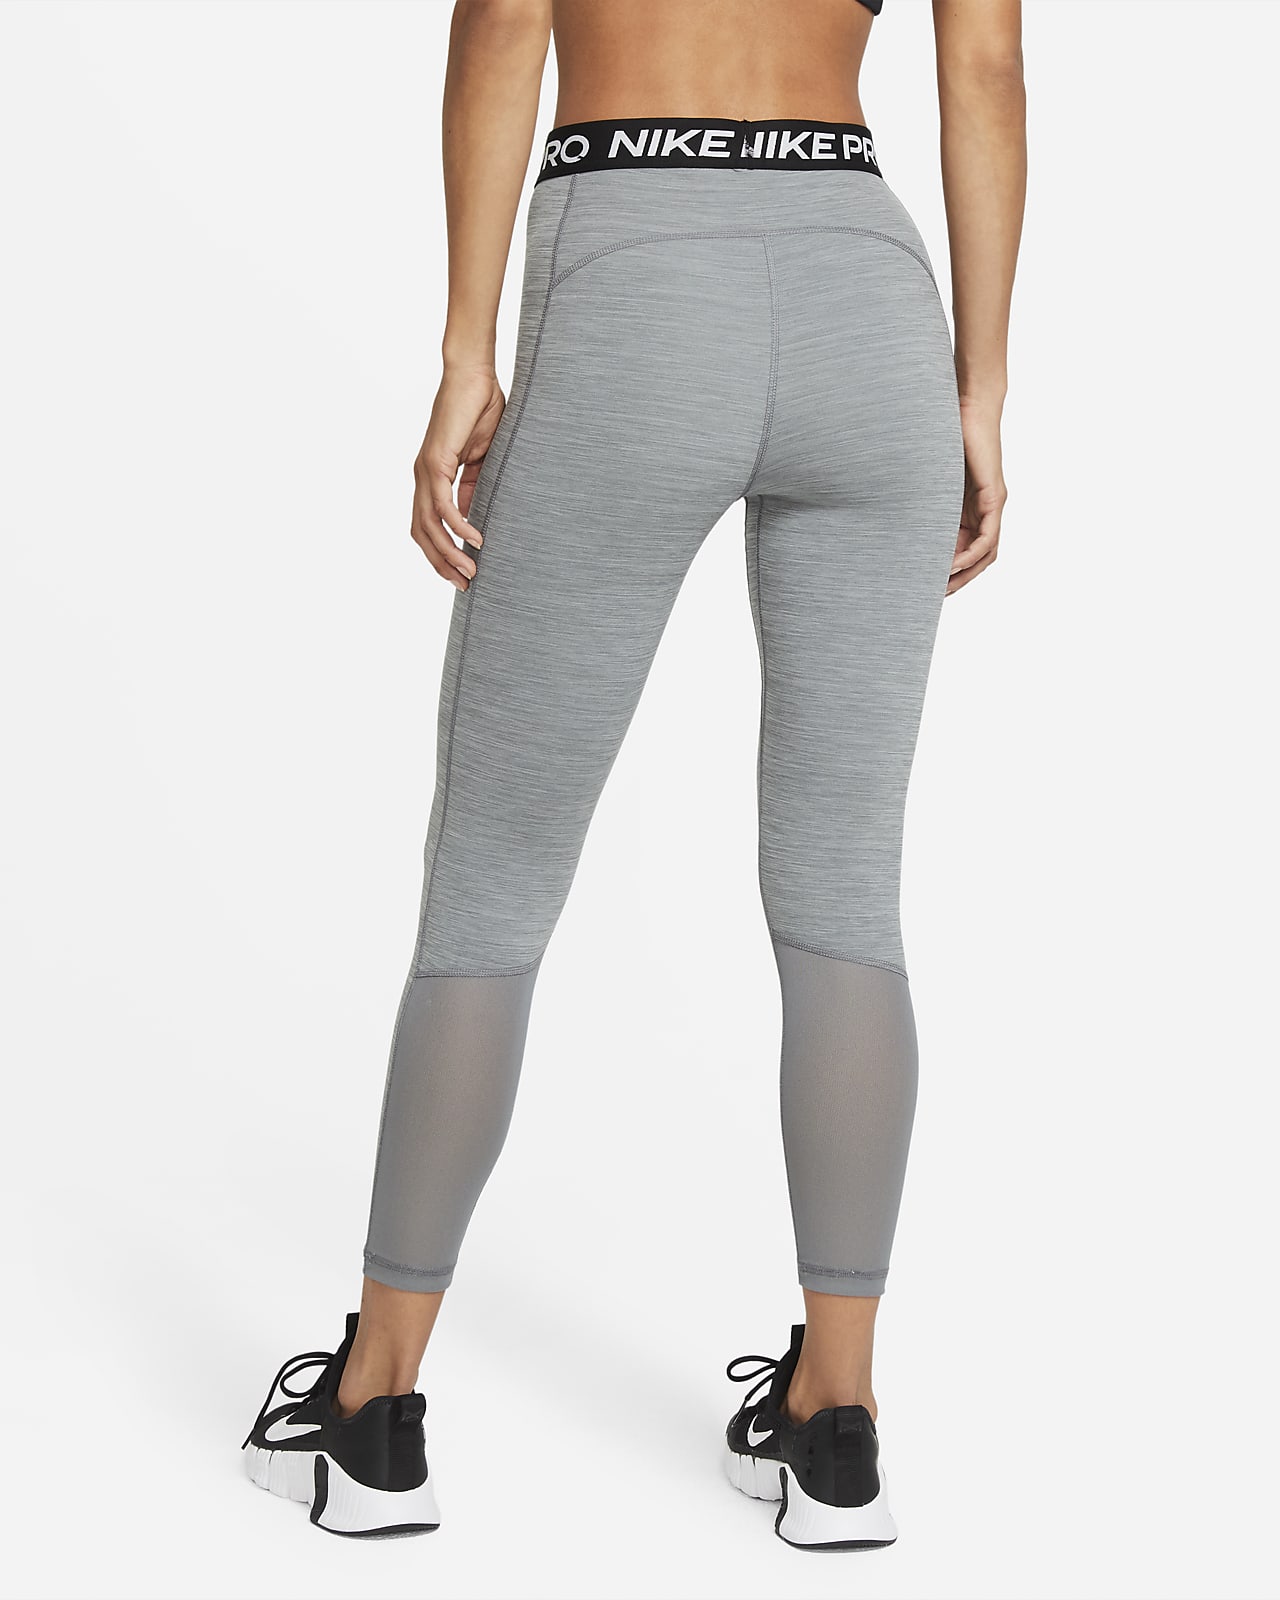 womens grey nike pro leggings